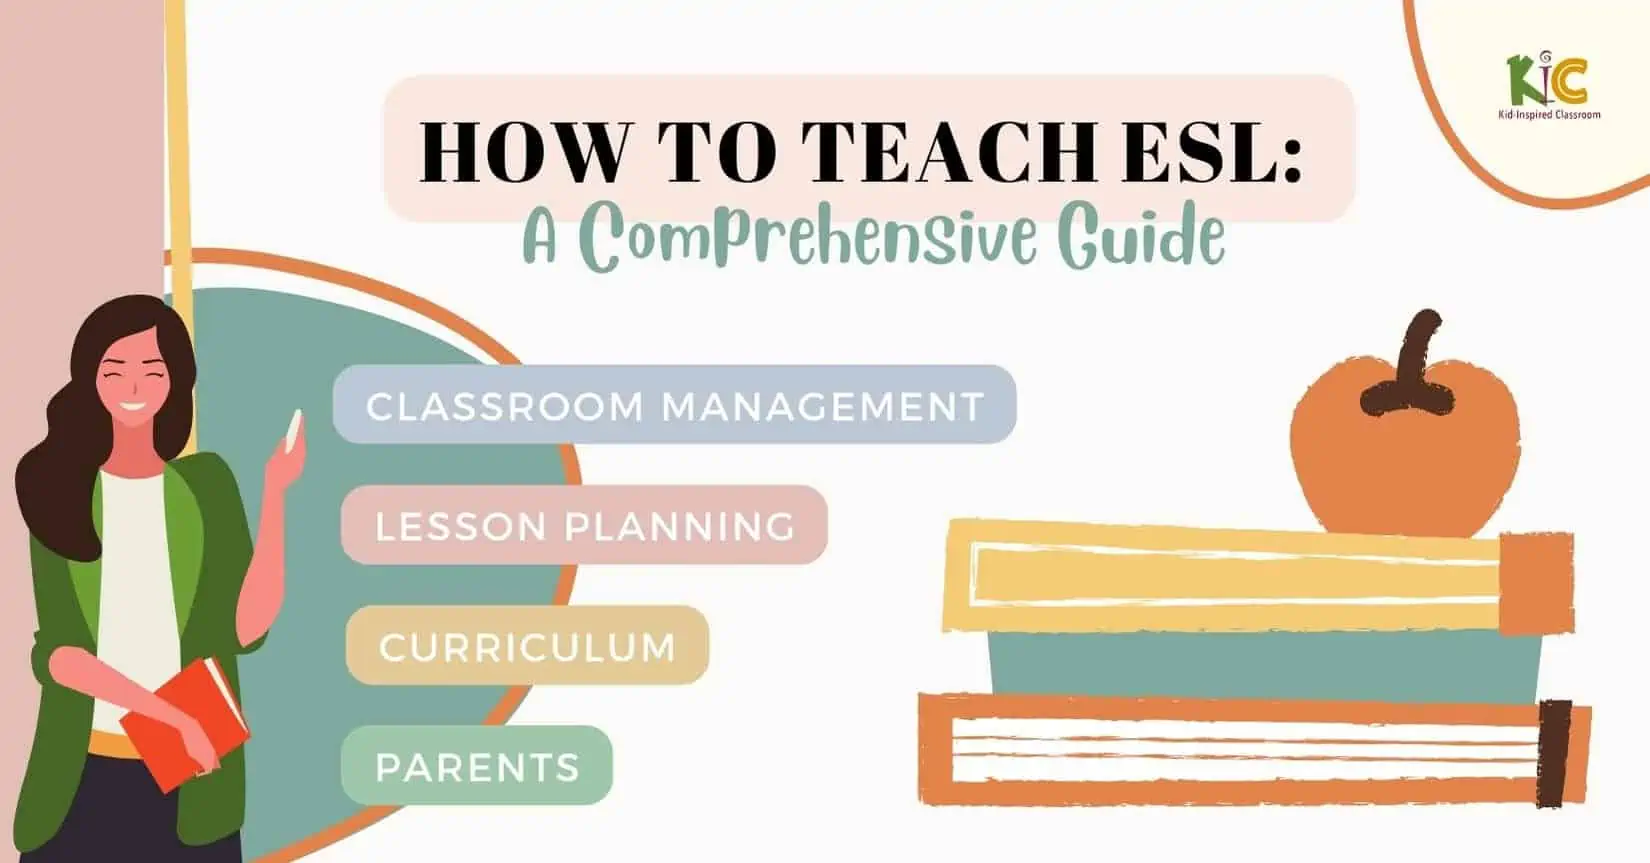 Comprehensive guide for teaching ESL.